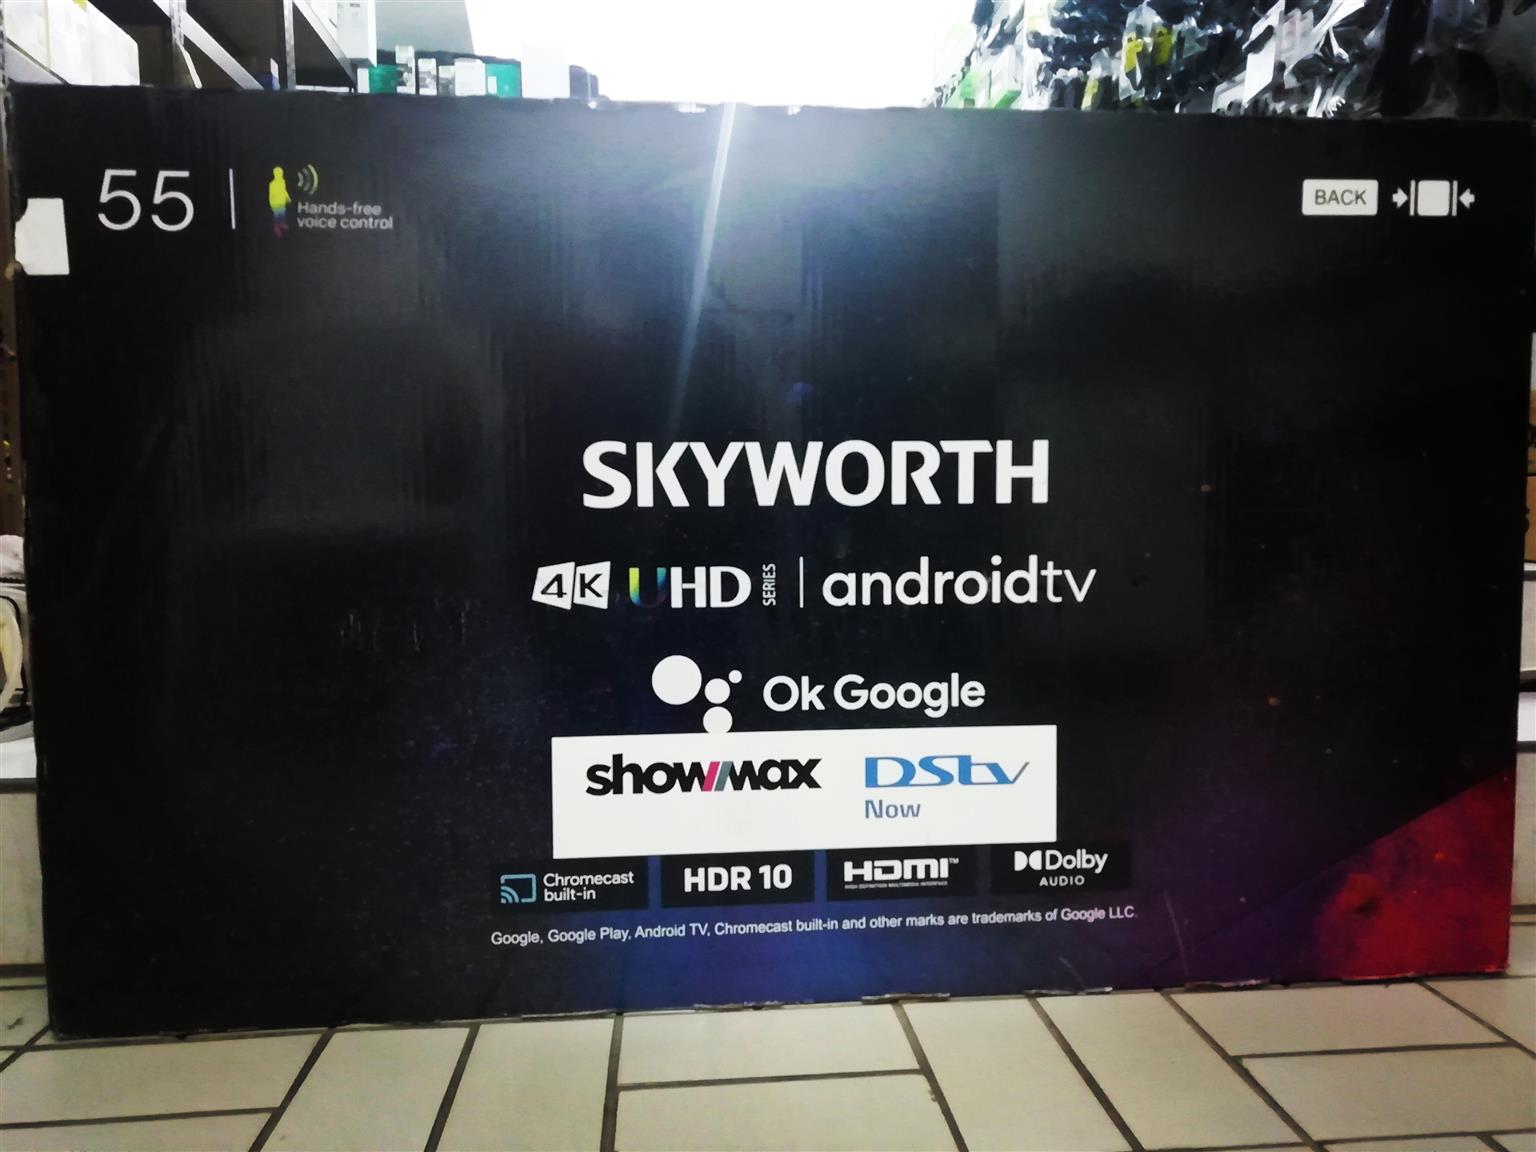 Skyworth 55" Android TV